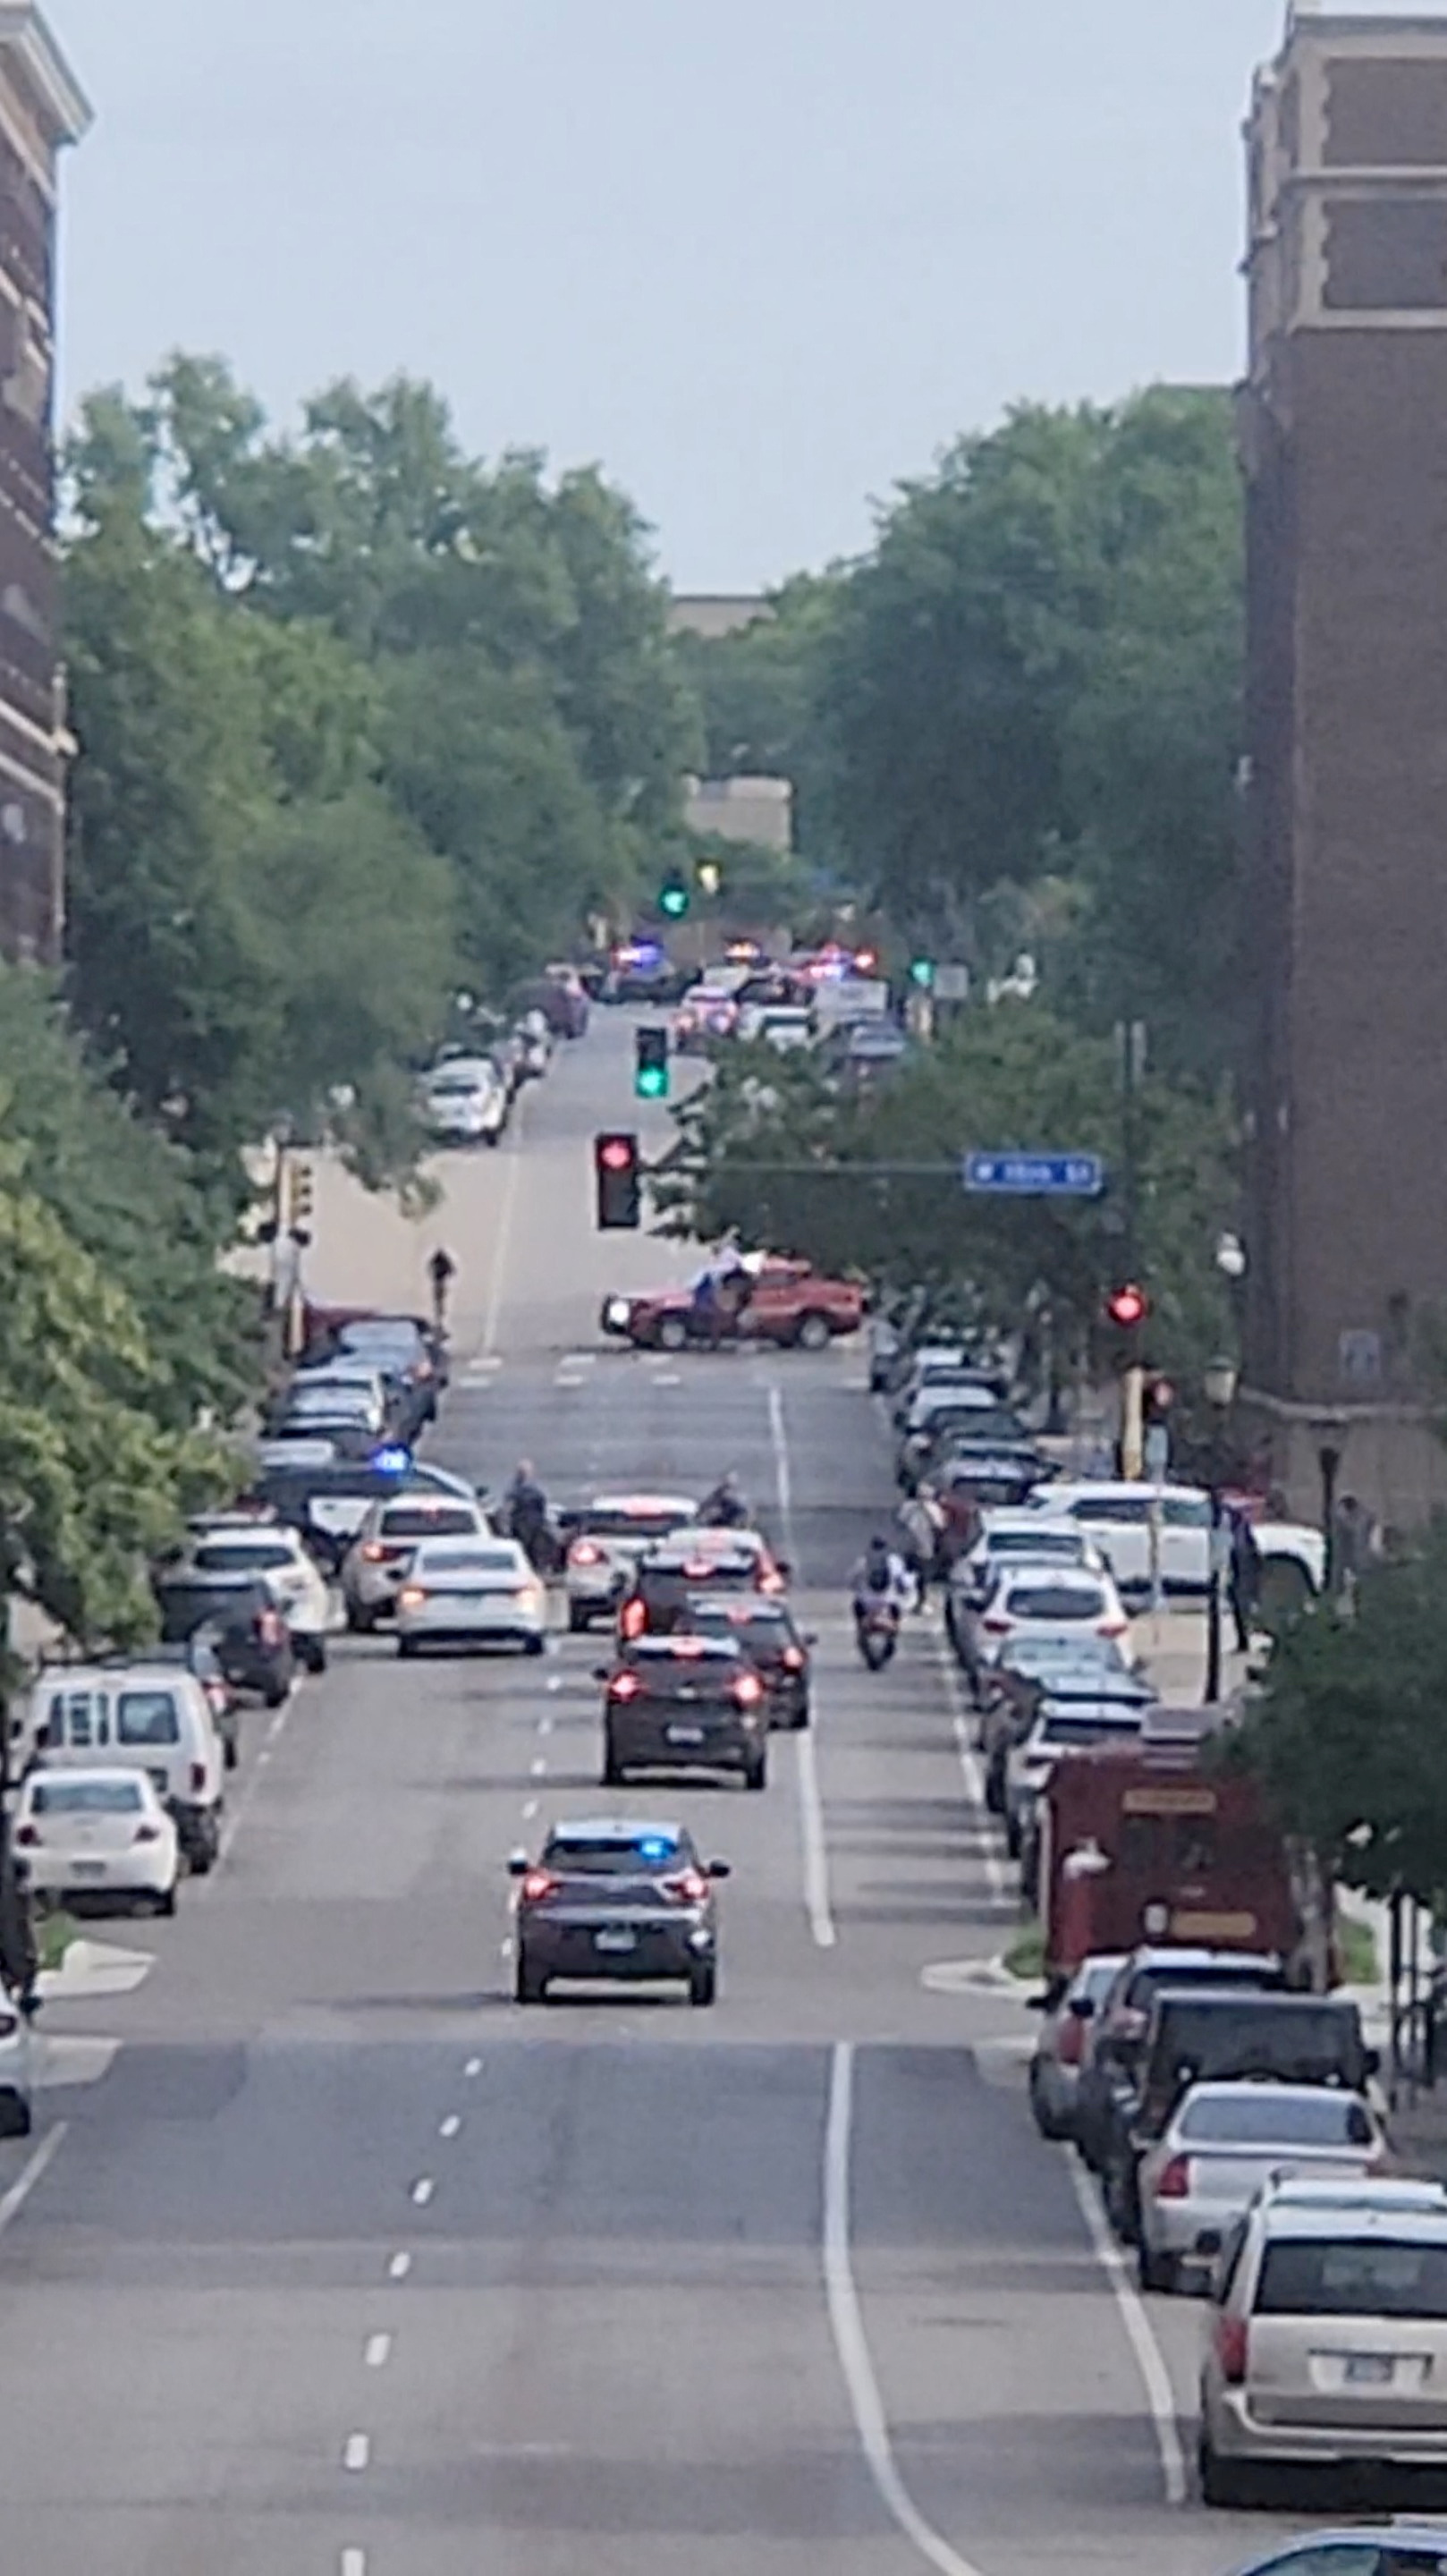 Shooting incident in Minneapolis